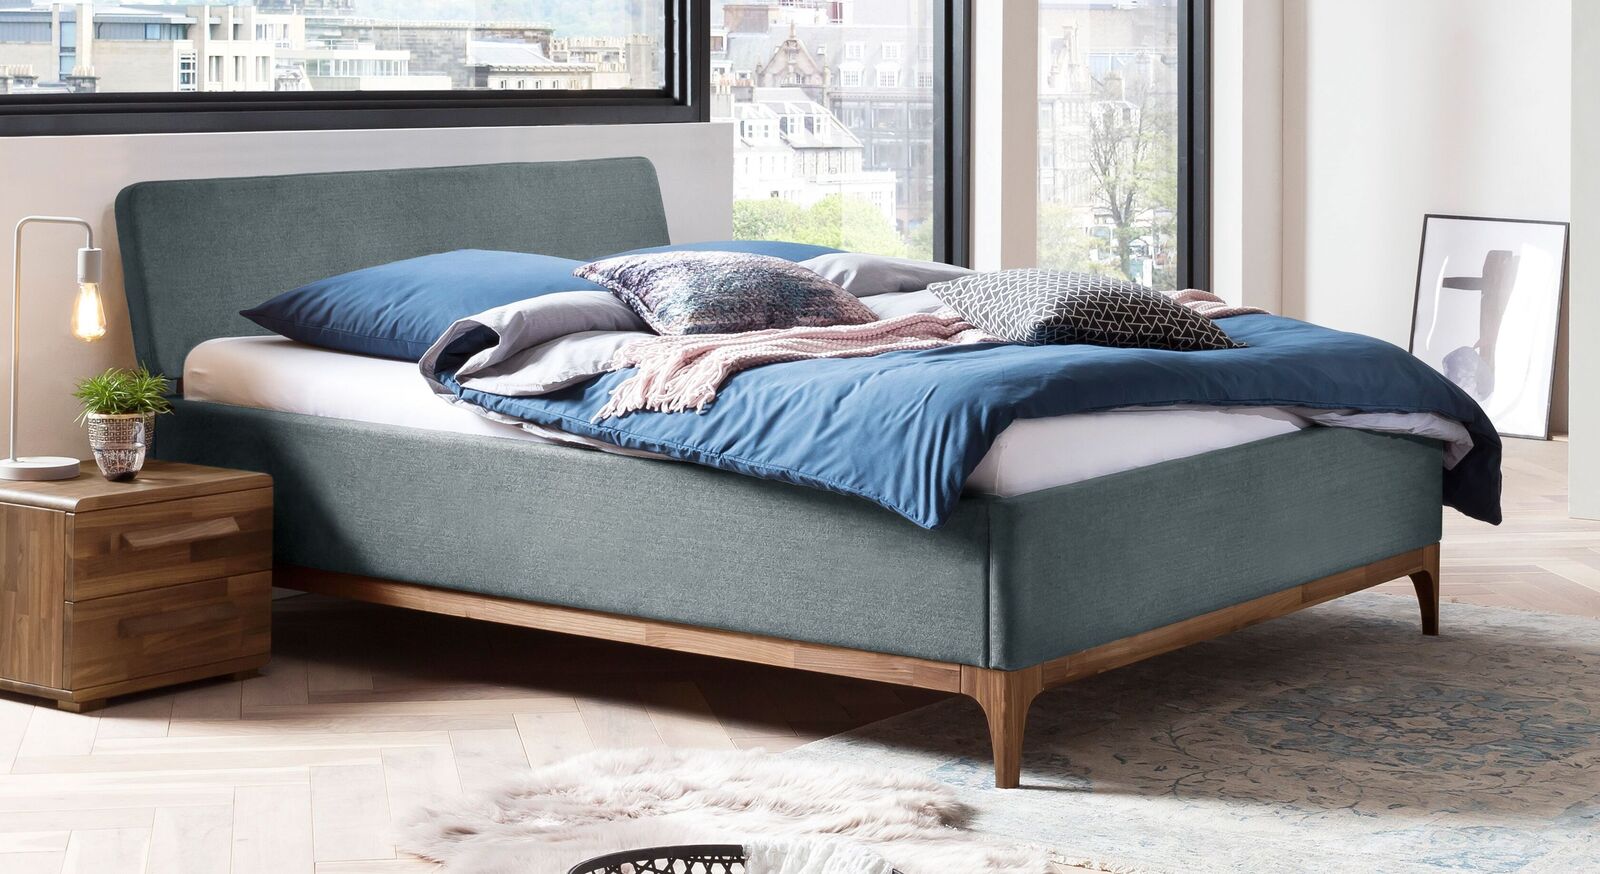 Bett Rasma mit Rahmenhöhe 48 cm und Bezug in Blaugrau